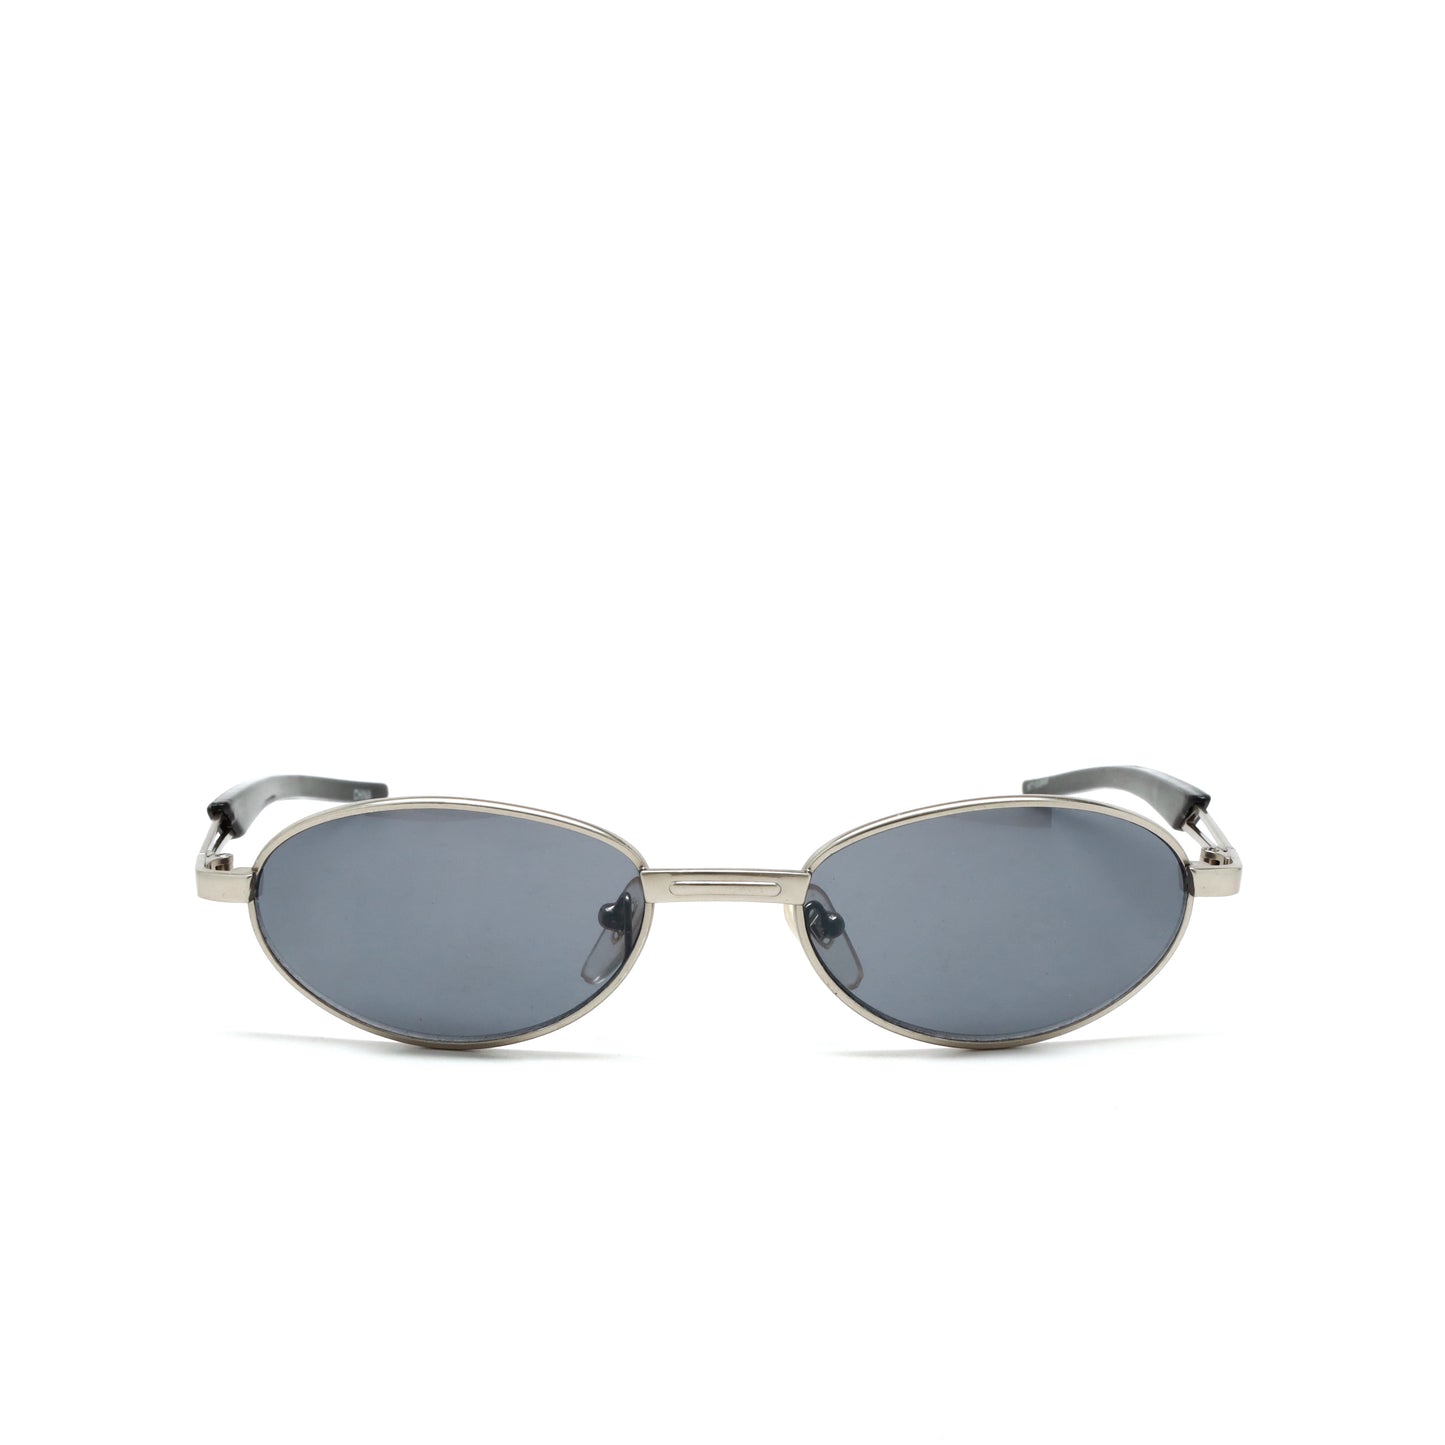 Vintage Small Size 1990s Wraparound Matrix Style Neo Shape Sunglasses - Silver